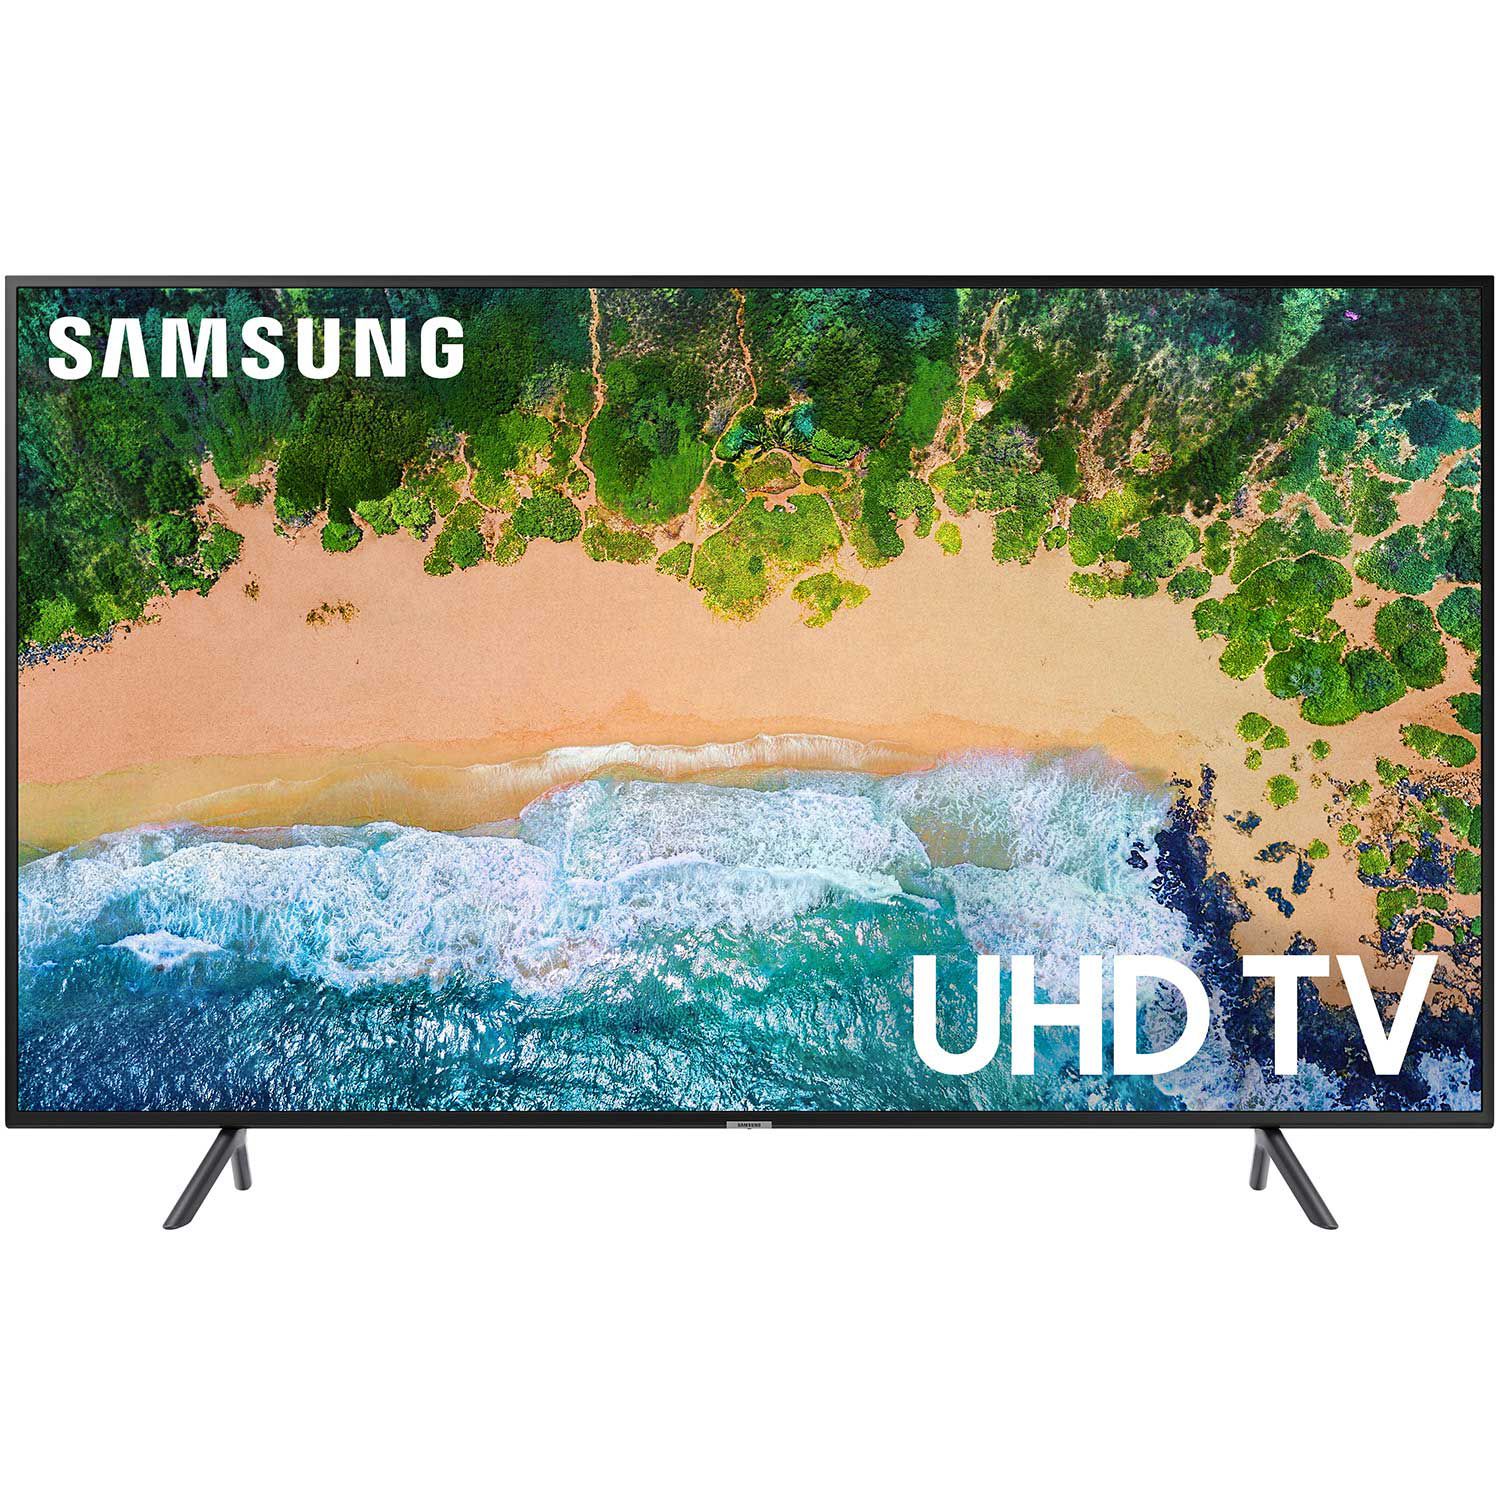 Samsung UN58MU6070 58″ 4K 2160P Smart LED TV